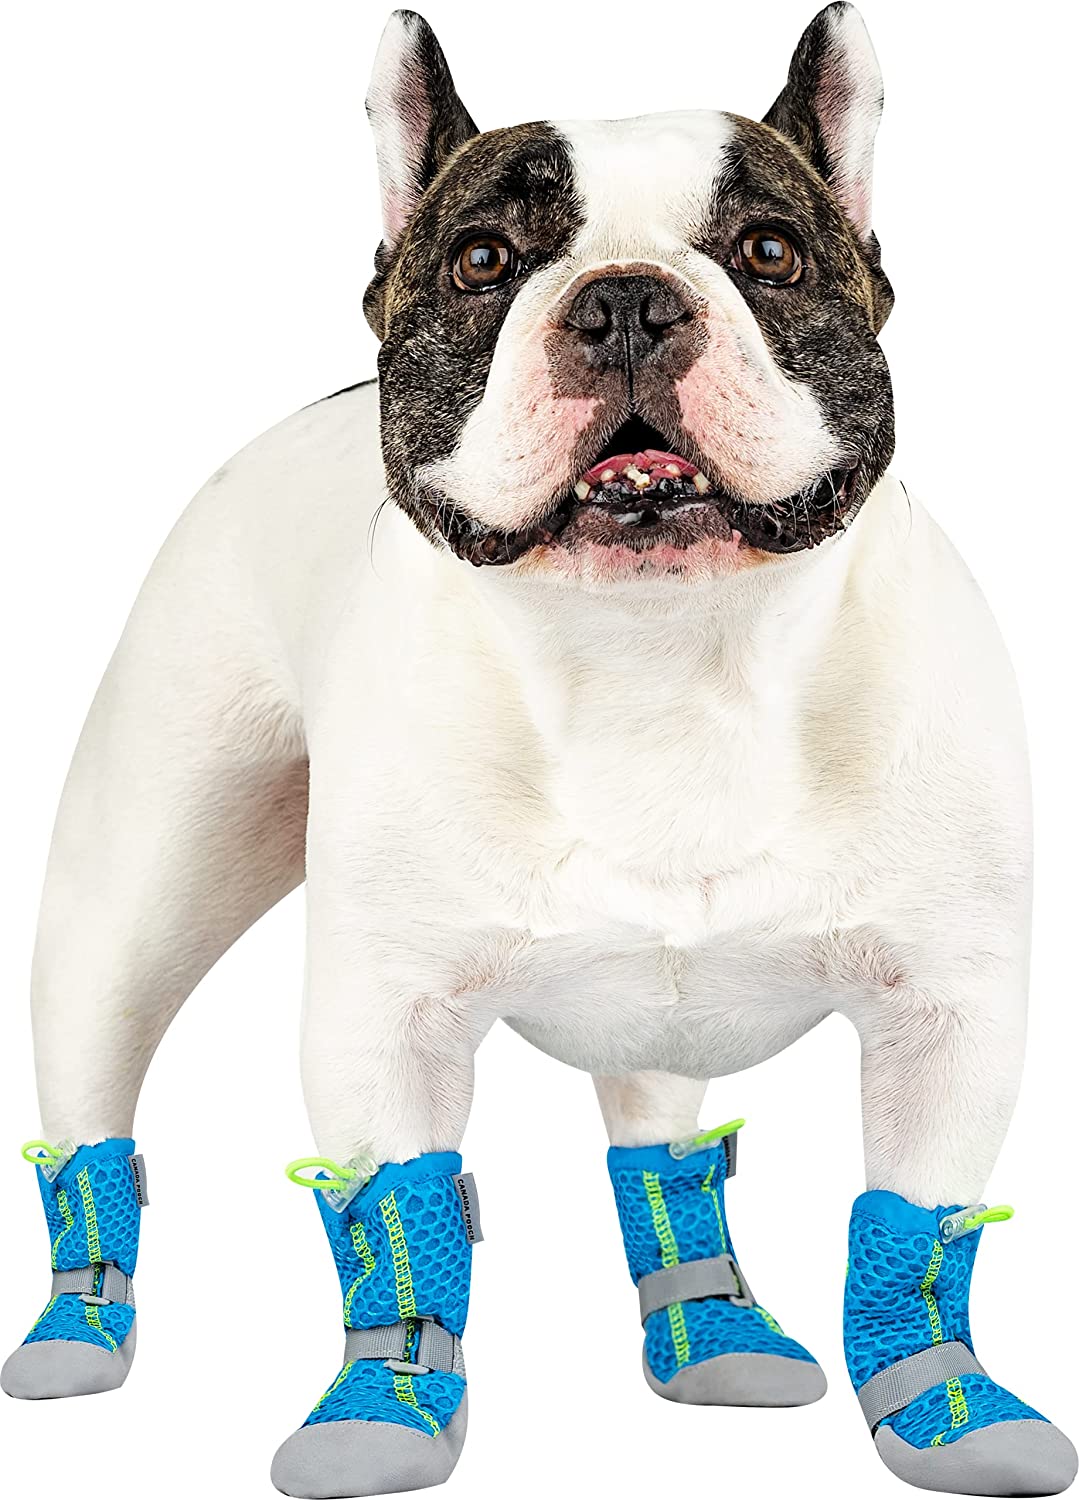 Canada Pooch Dog Boots